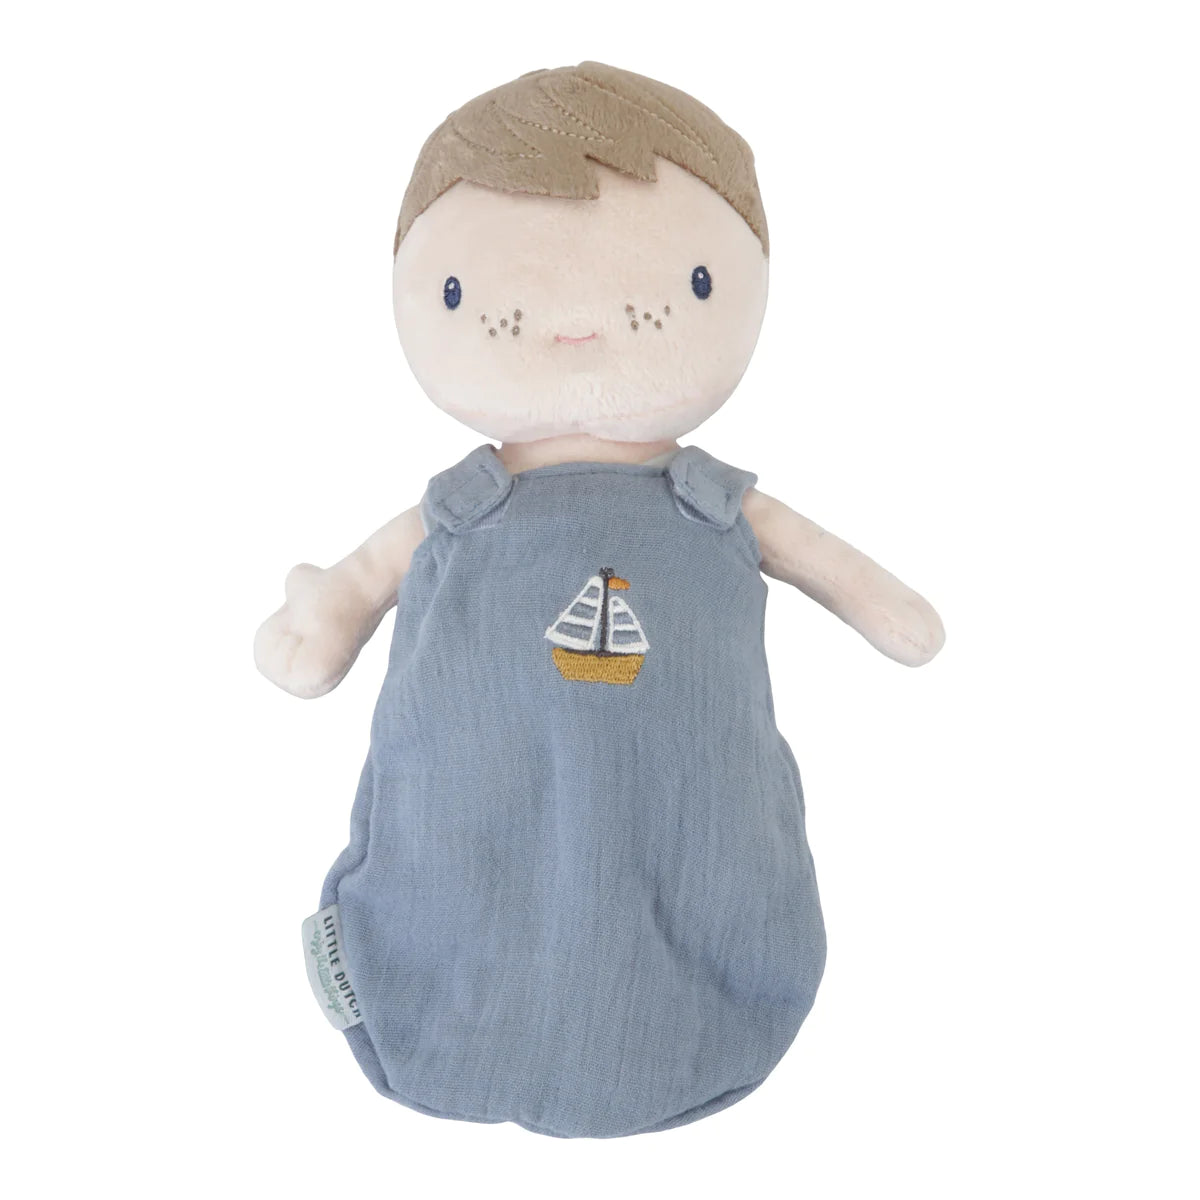 Little Dutch Baby Jim fabric doll in his sleeping bag